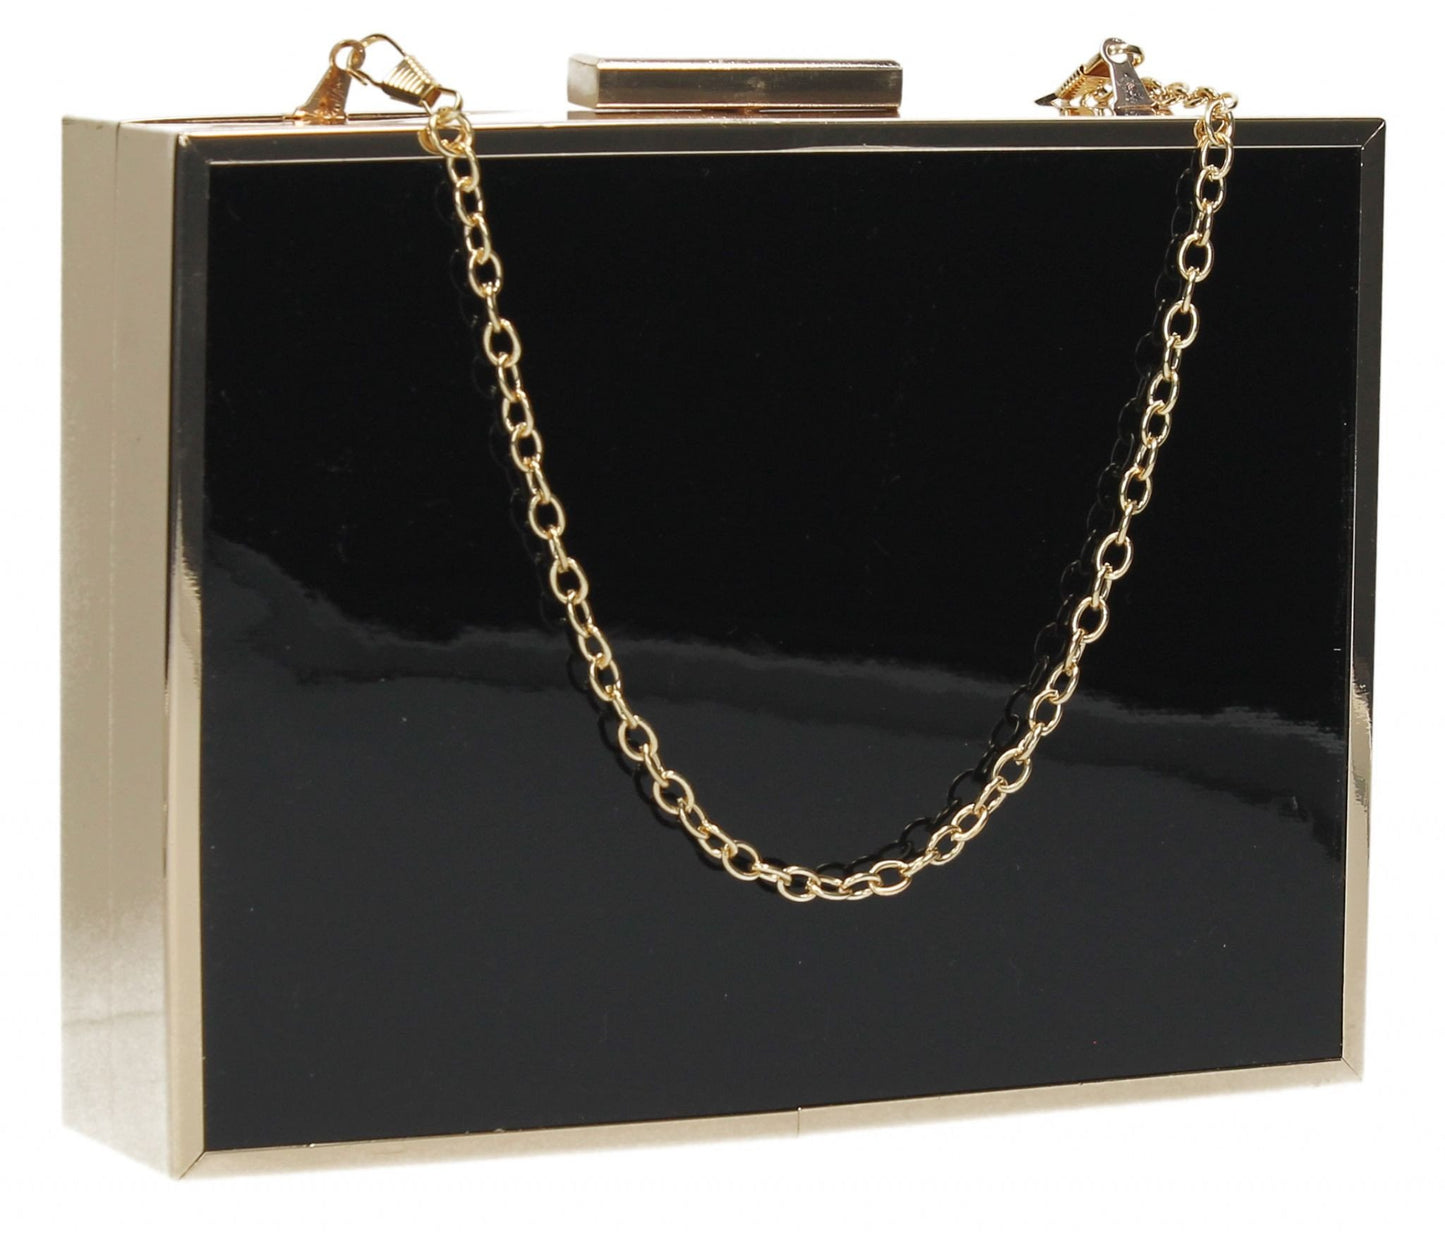 SWANKYSWANS Kate Box Clutch Bag Black Cute Cheap Clutch Bag For Weddings School and Work